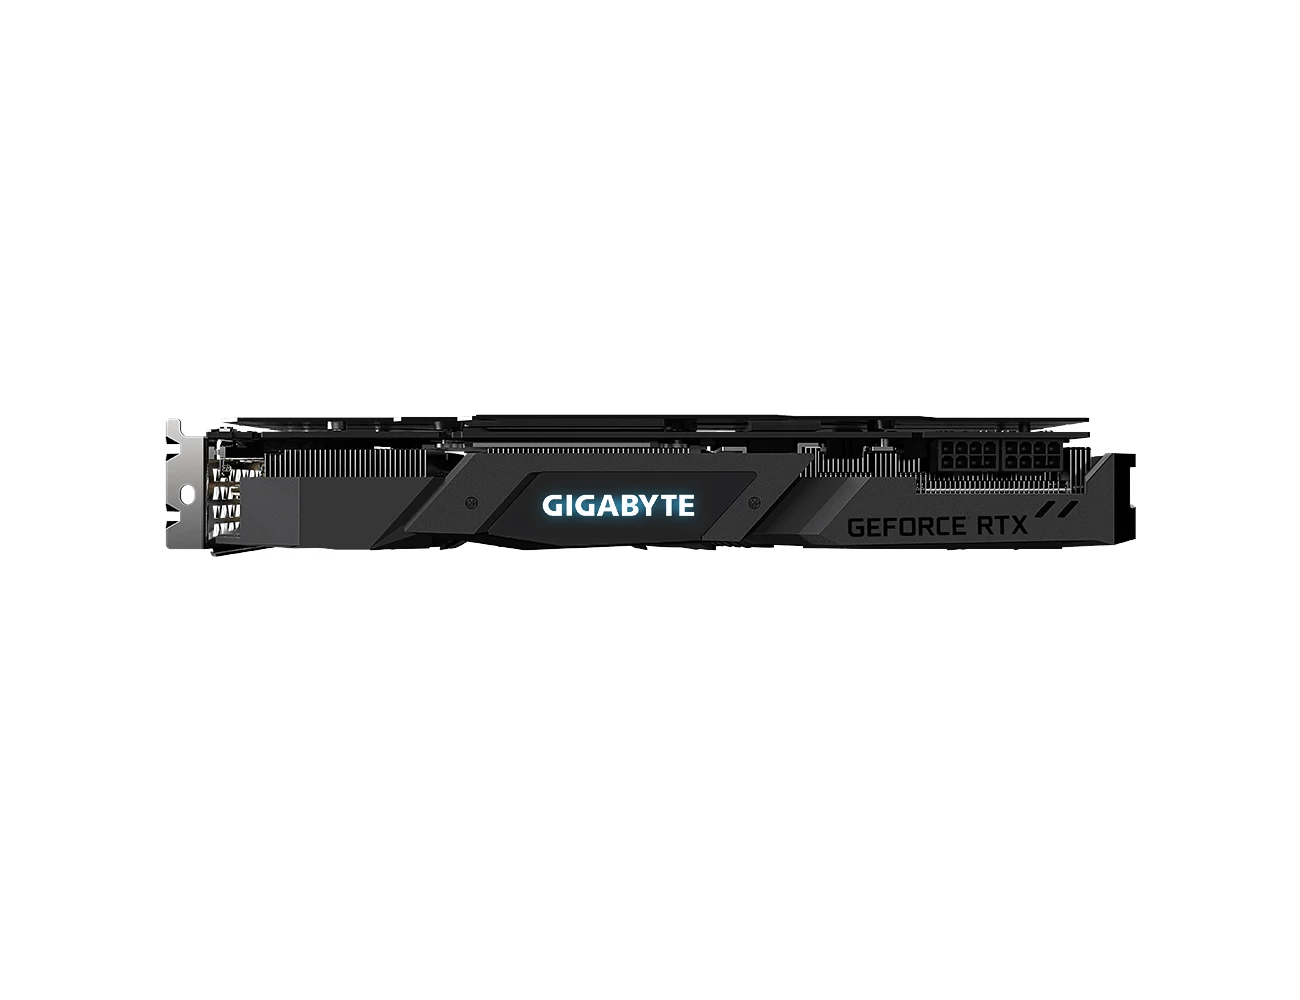 GIGABYTE GeForce RTX 2080 Ti WINDFORCE 11G Front View